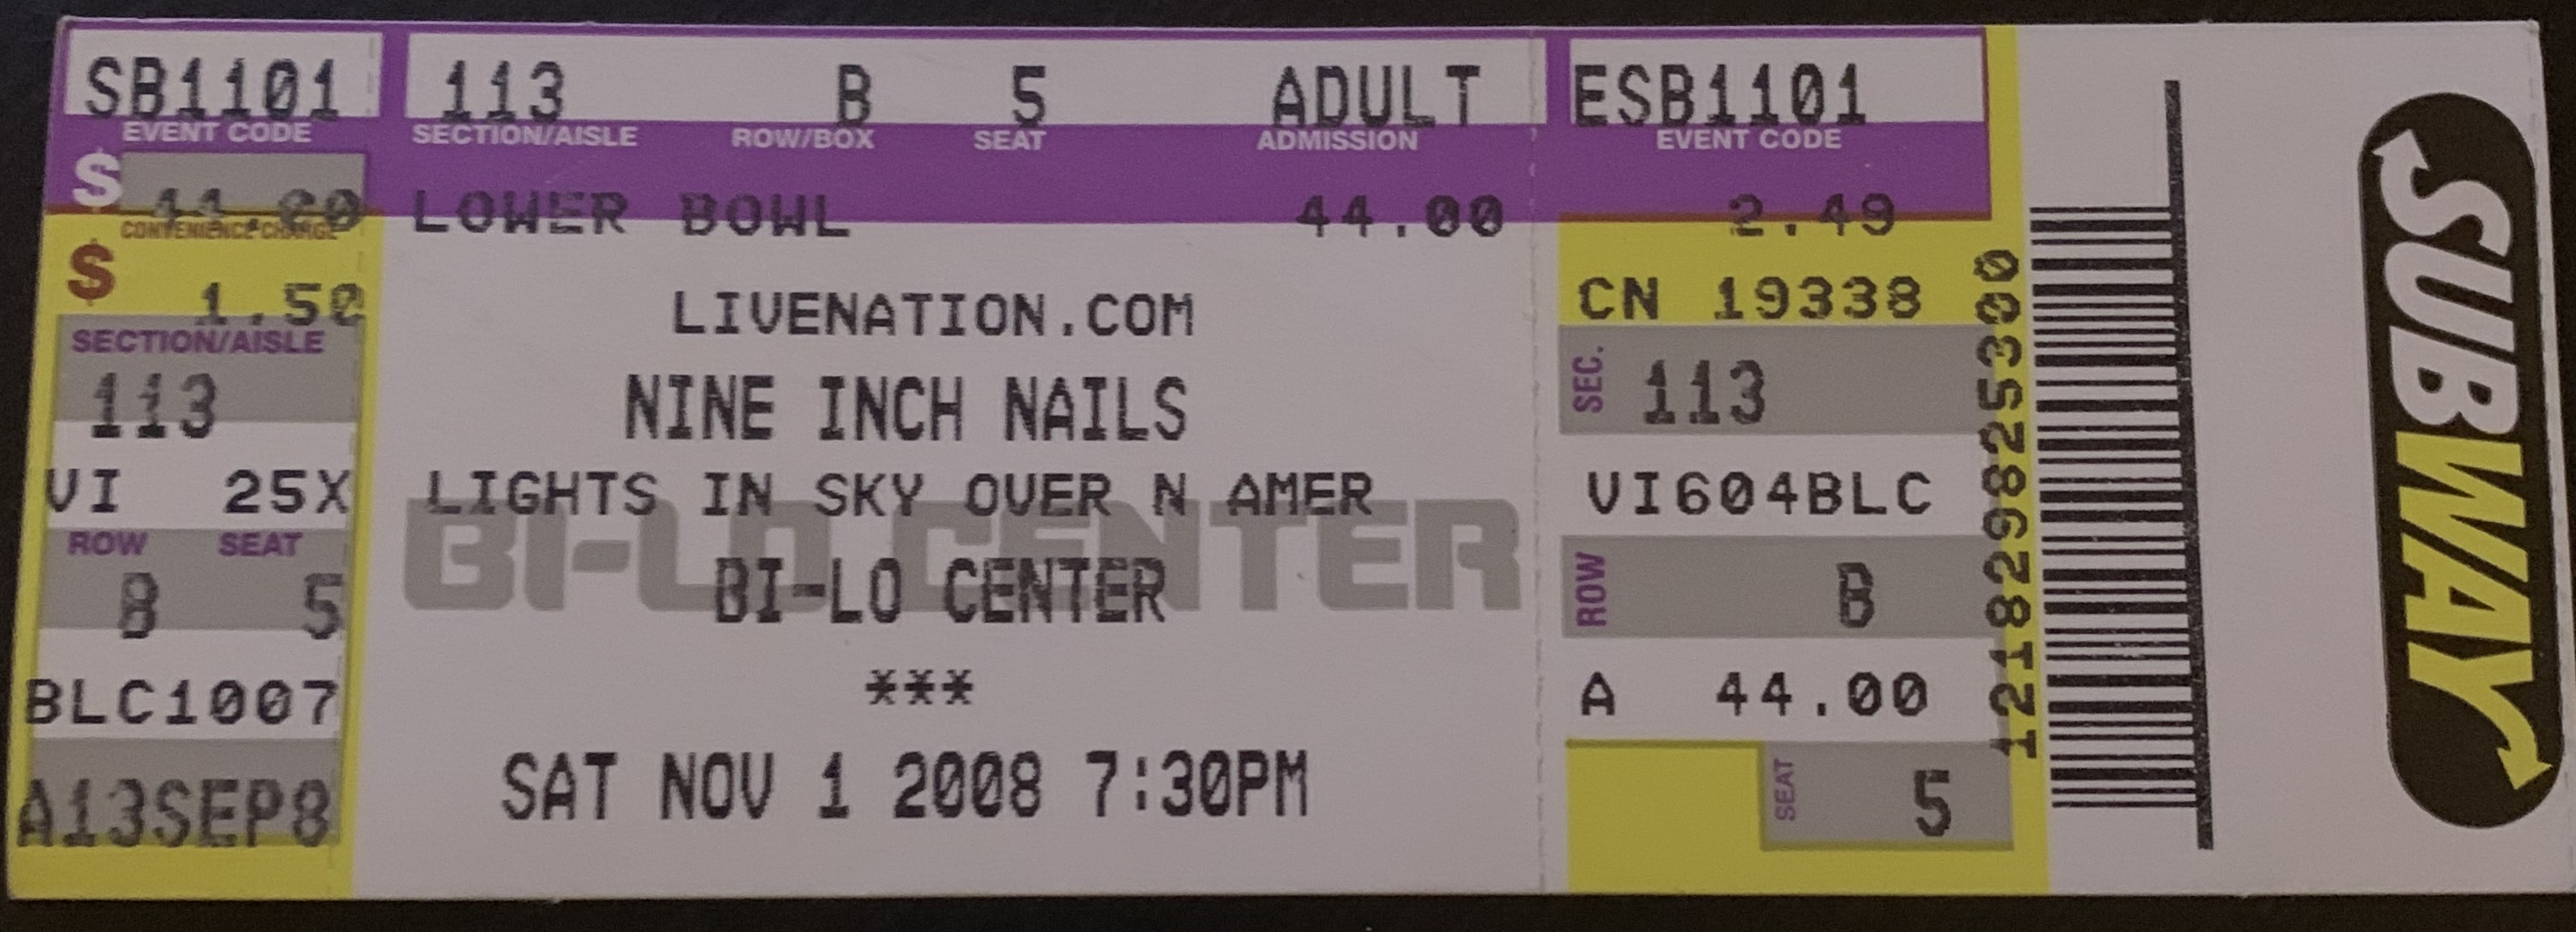 2008/11/01 Ticket